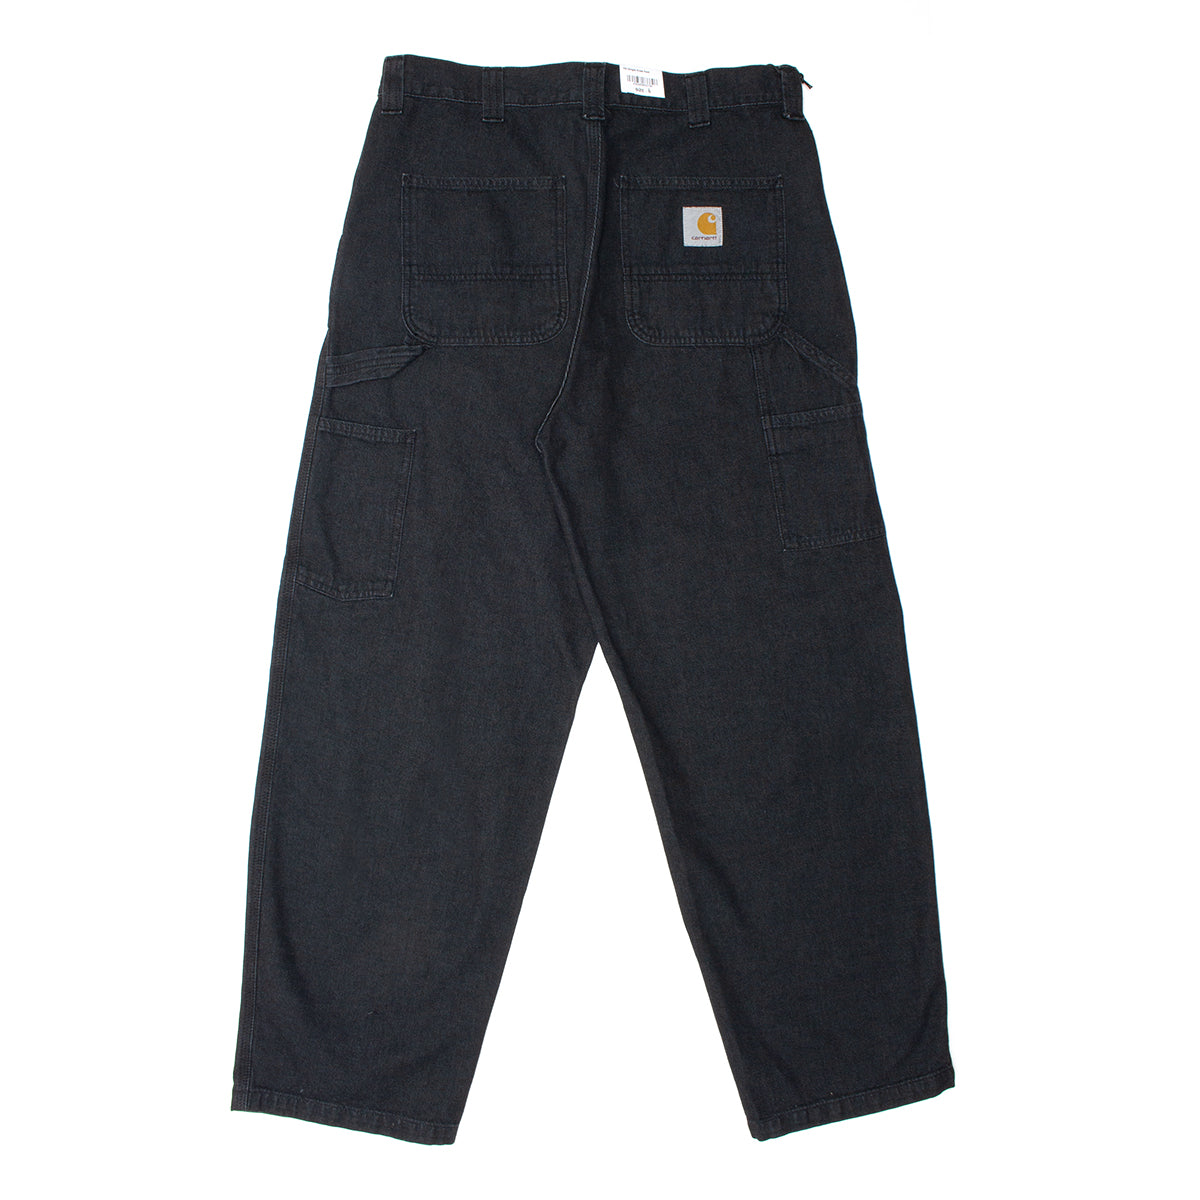 Carhartt WIP | OG Single Knee Pant Style # I03333-8906 Color : Black (Stone Washed)